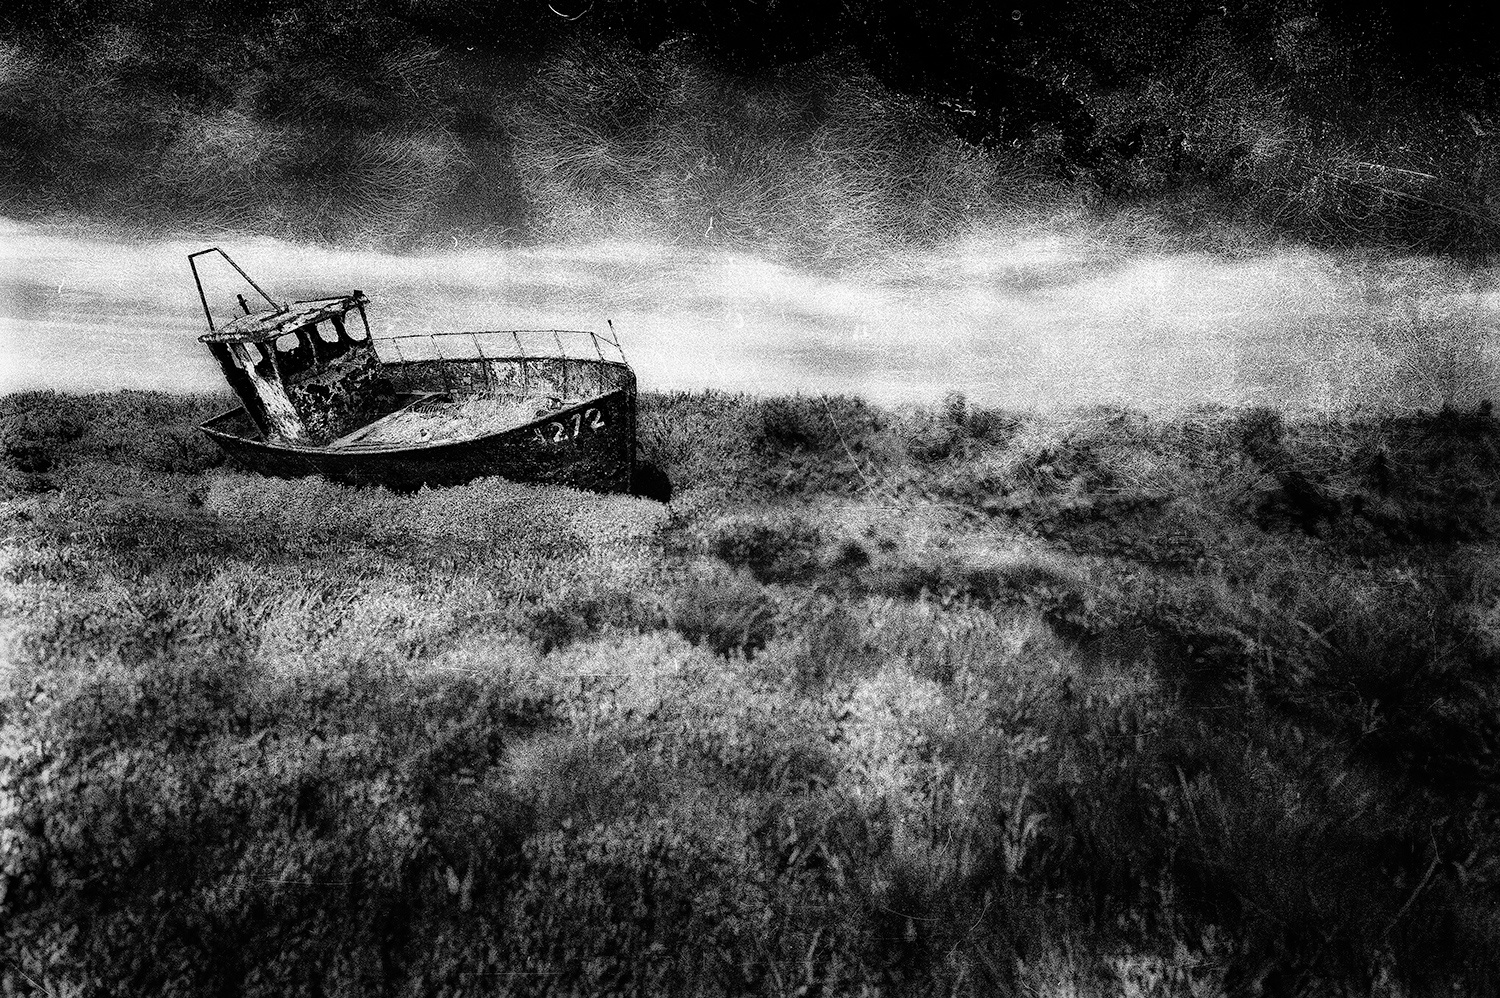 Sea of Grass by Mark Farquharson